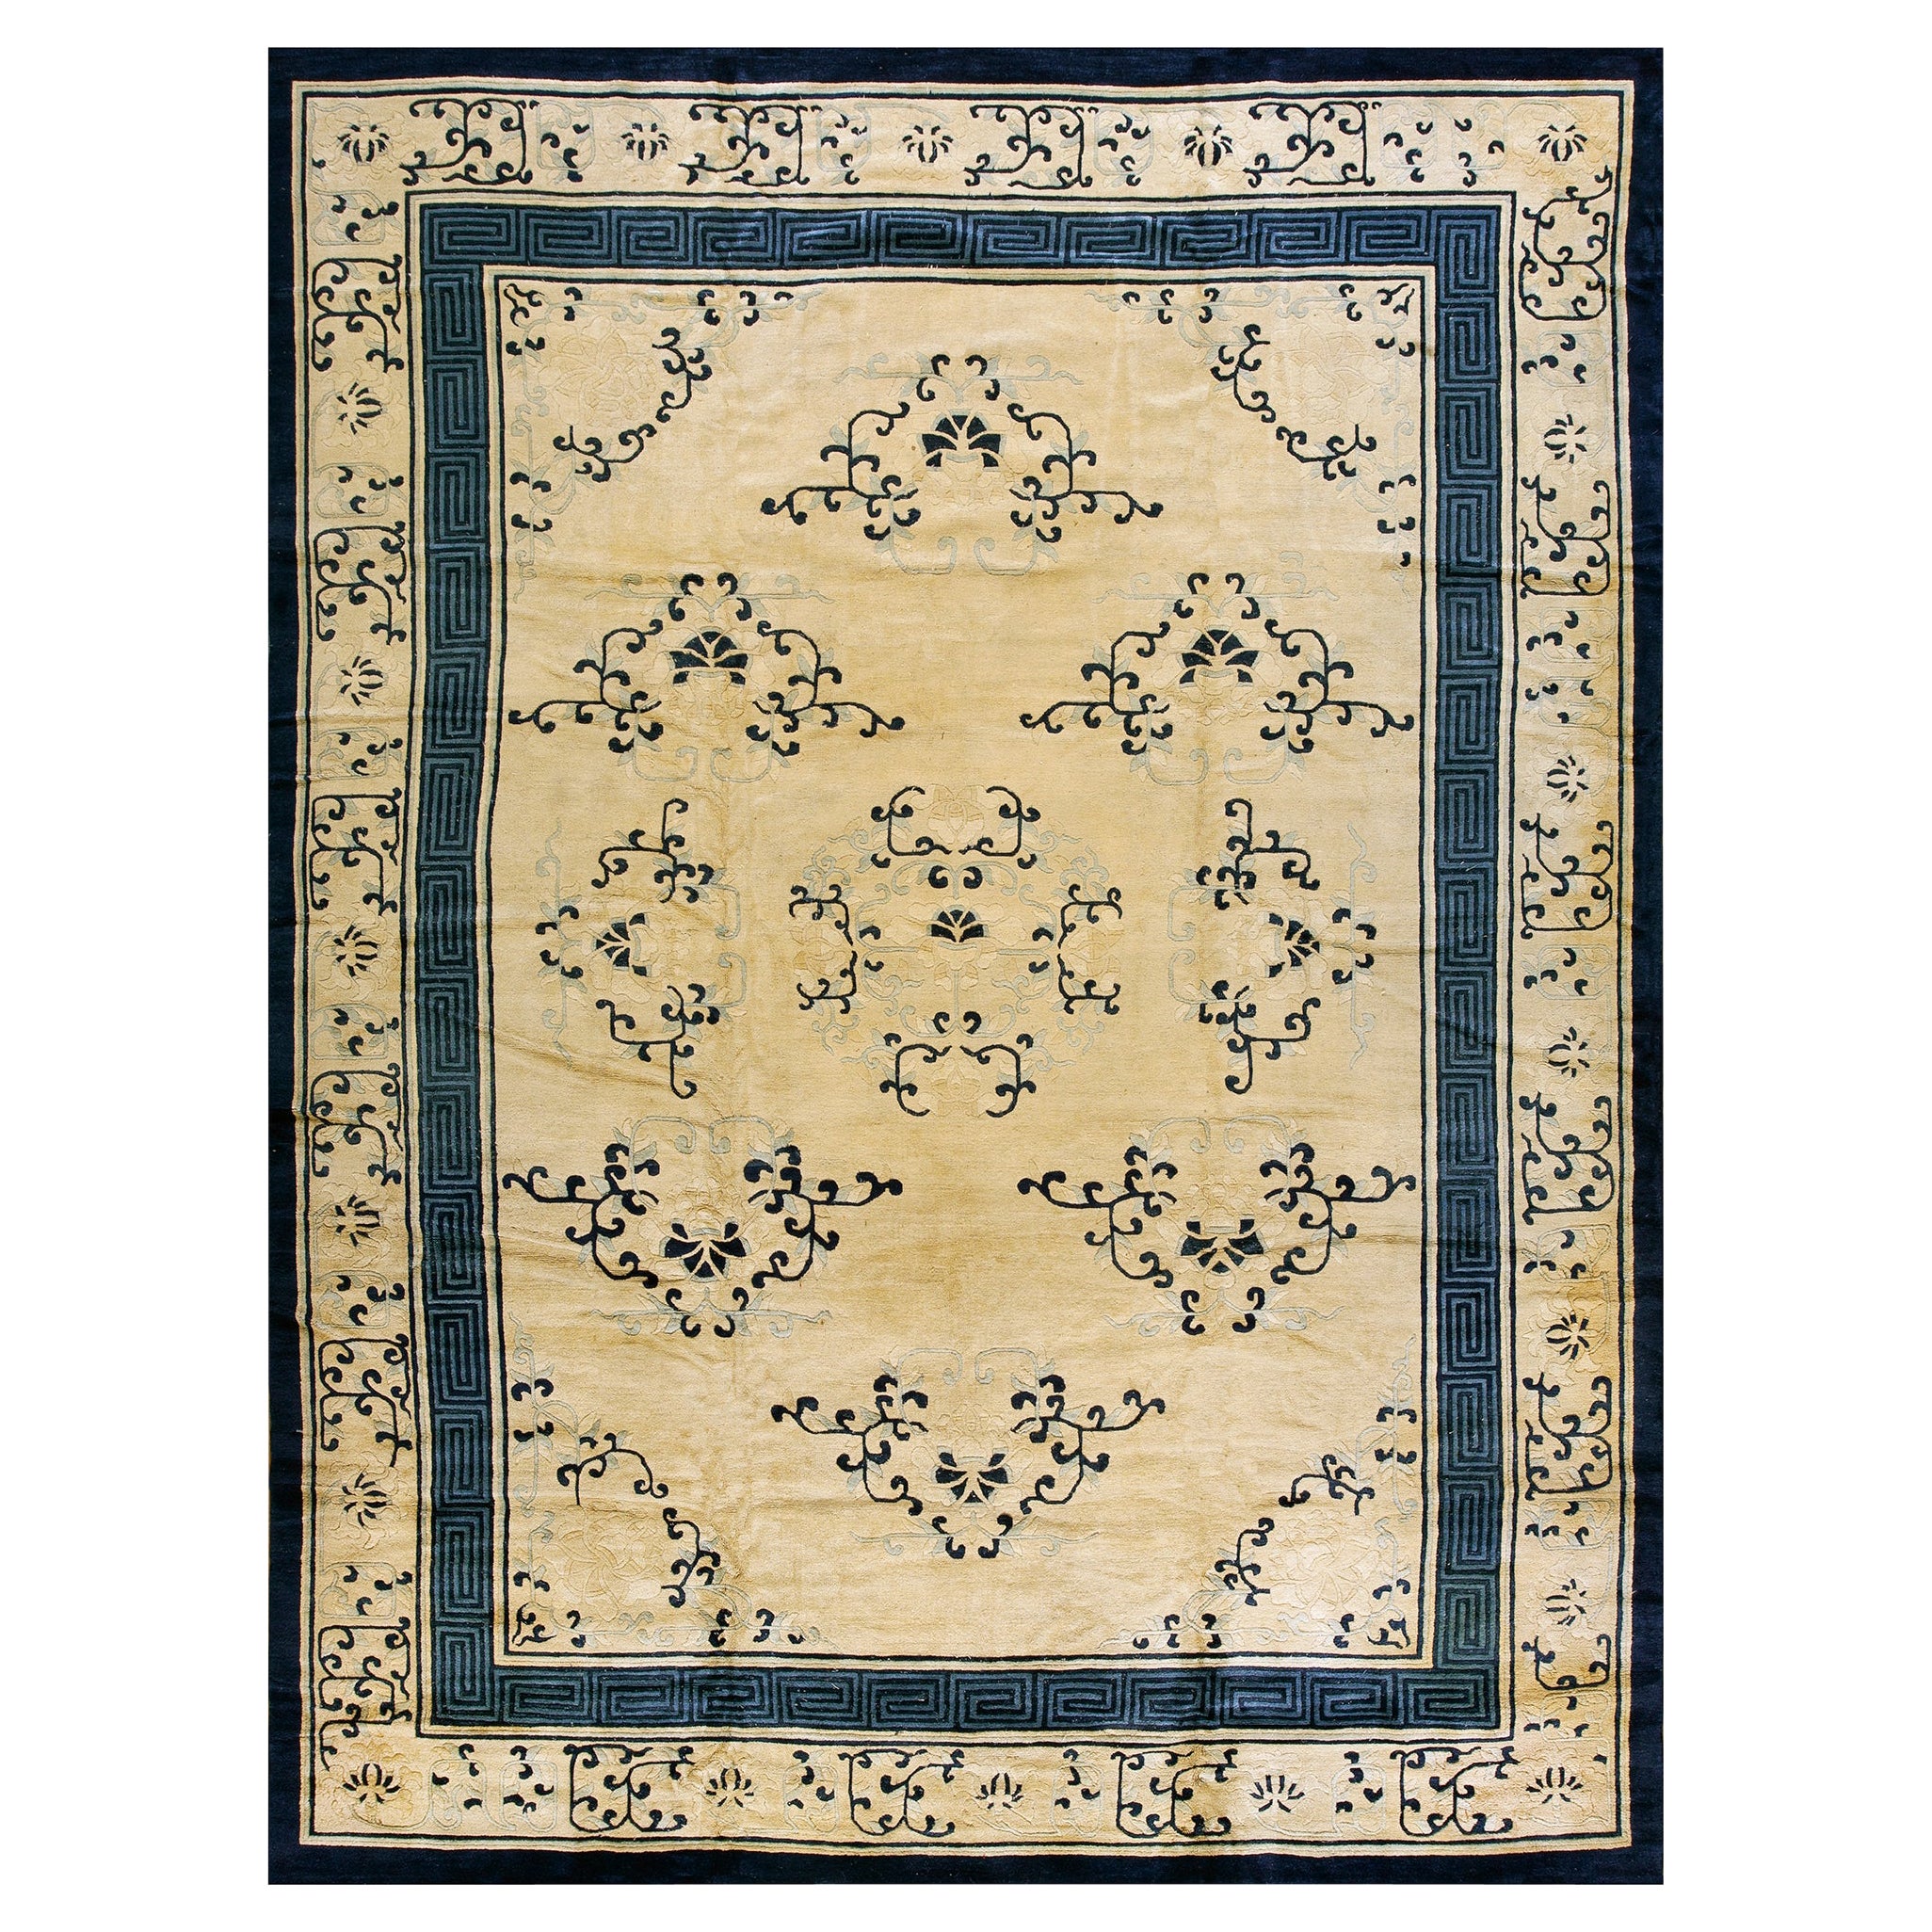 Late 19th Century Chinese Peking Carpet ( 8'9" x 11'6" - 267 x 351 )